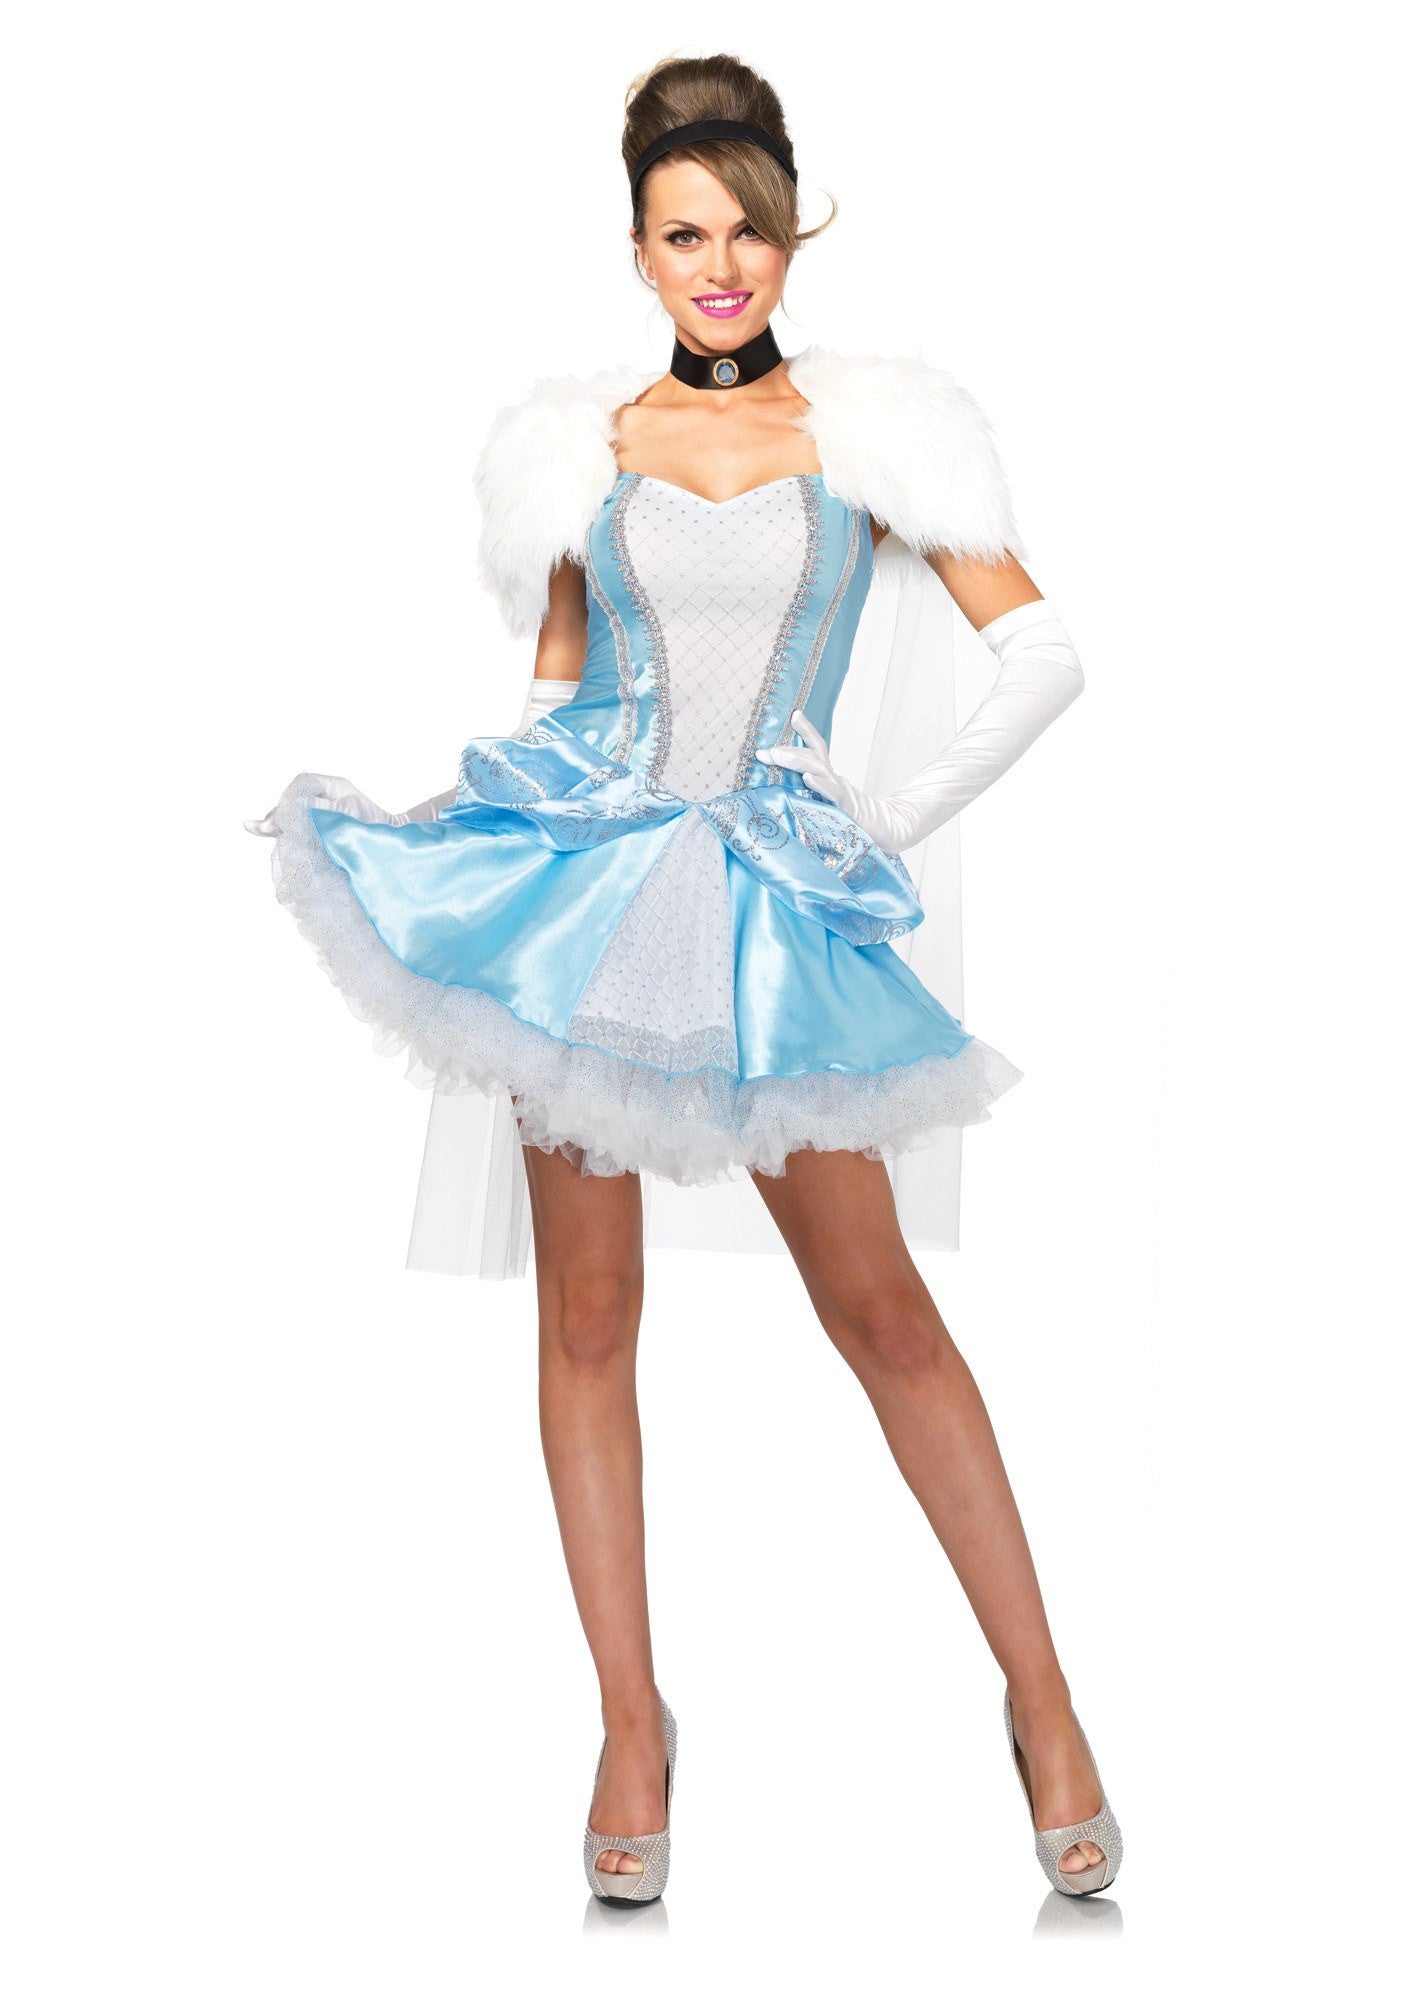 Costume - Slipper-less Sweetie Cinderella Costume